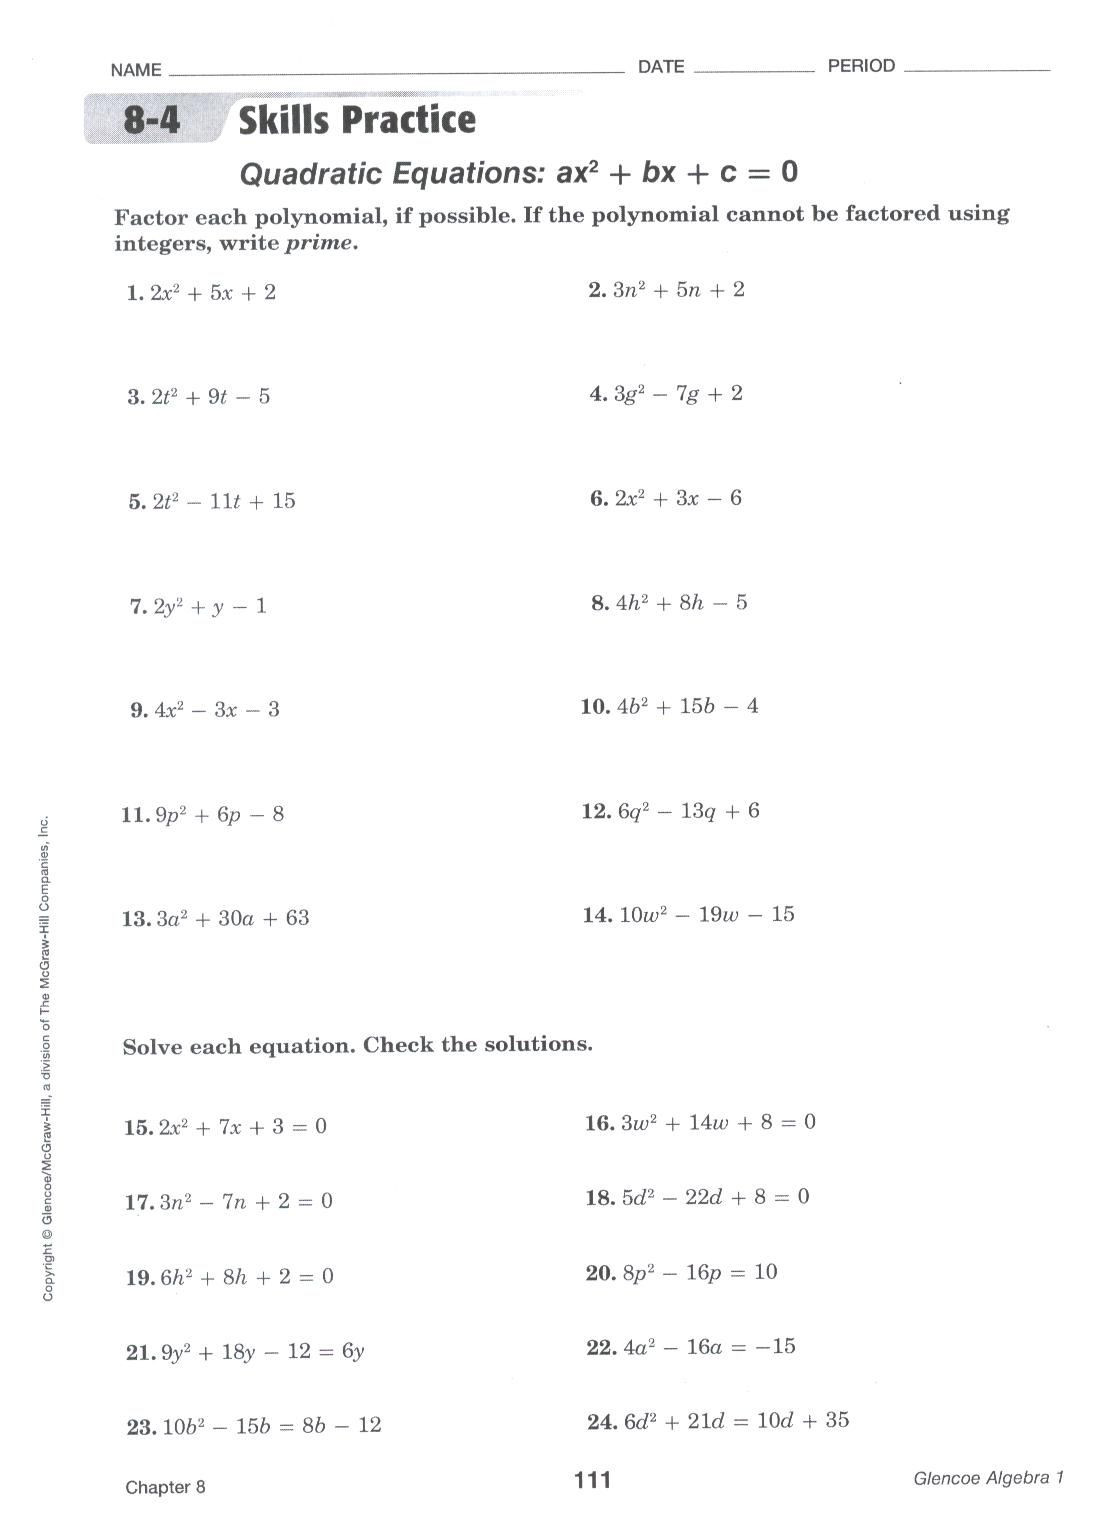 Factoring Quadratic Trinomials Worksheet Quadratic formula Worksheet Yahoo Image Search Results